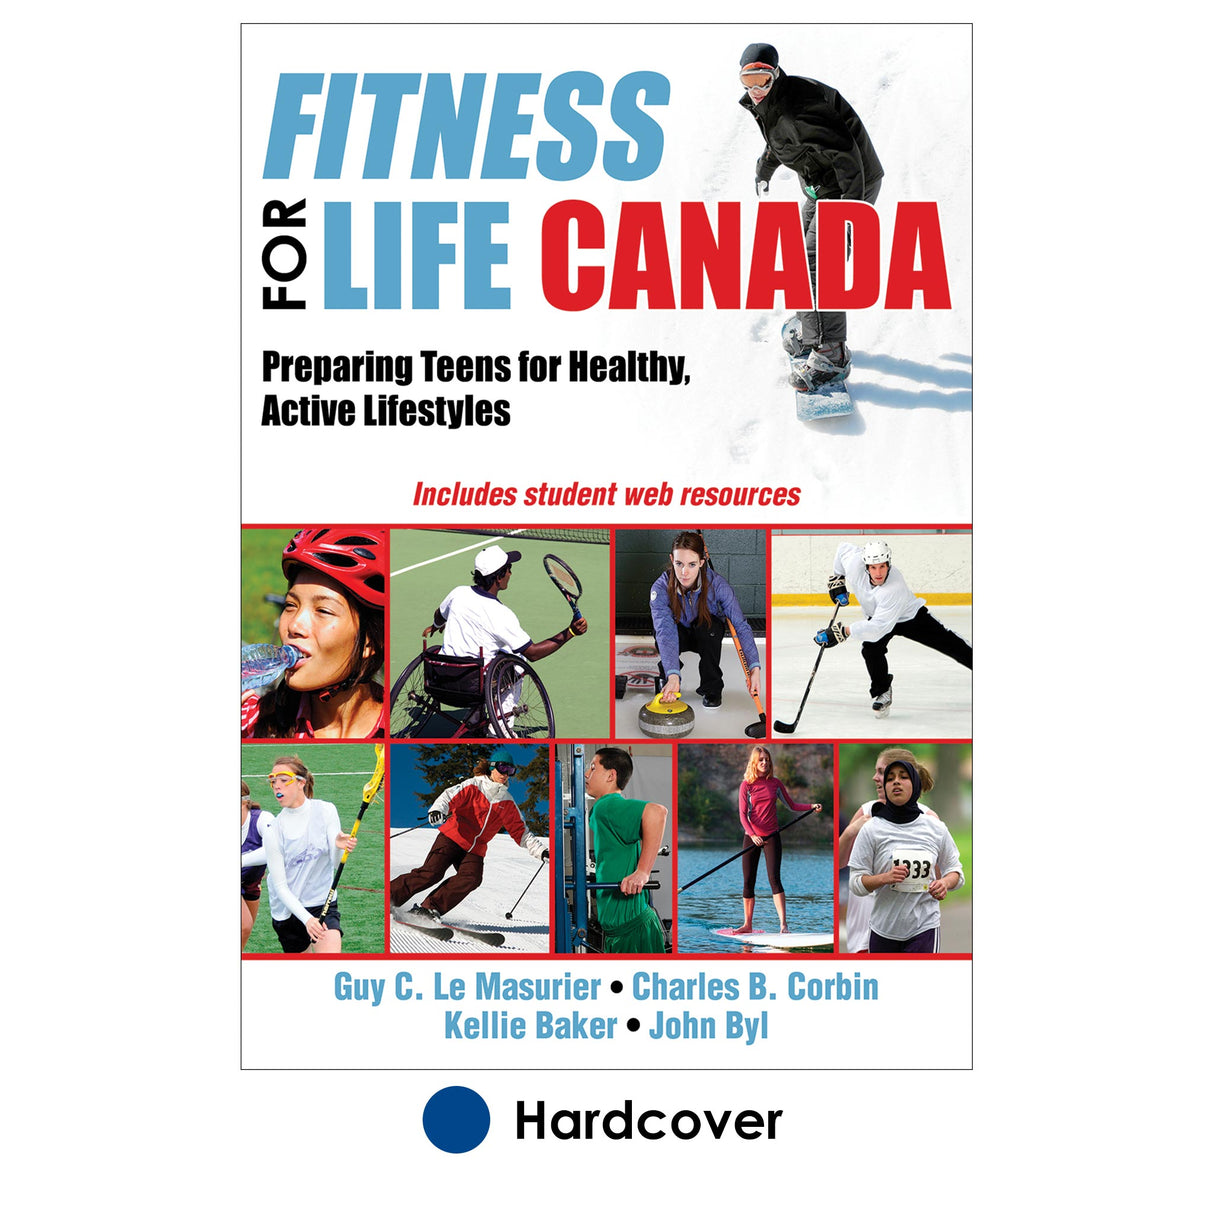 101 Workouts For Women eBook de Muscle & Fitness Hers - EPUB Livro